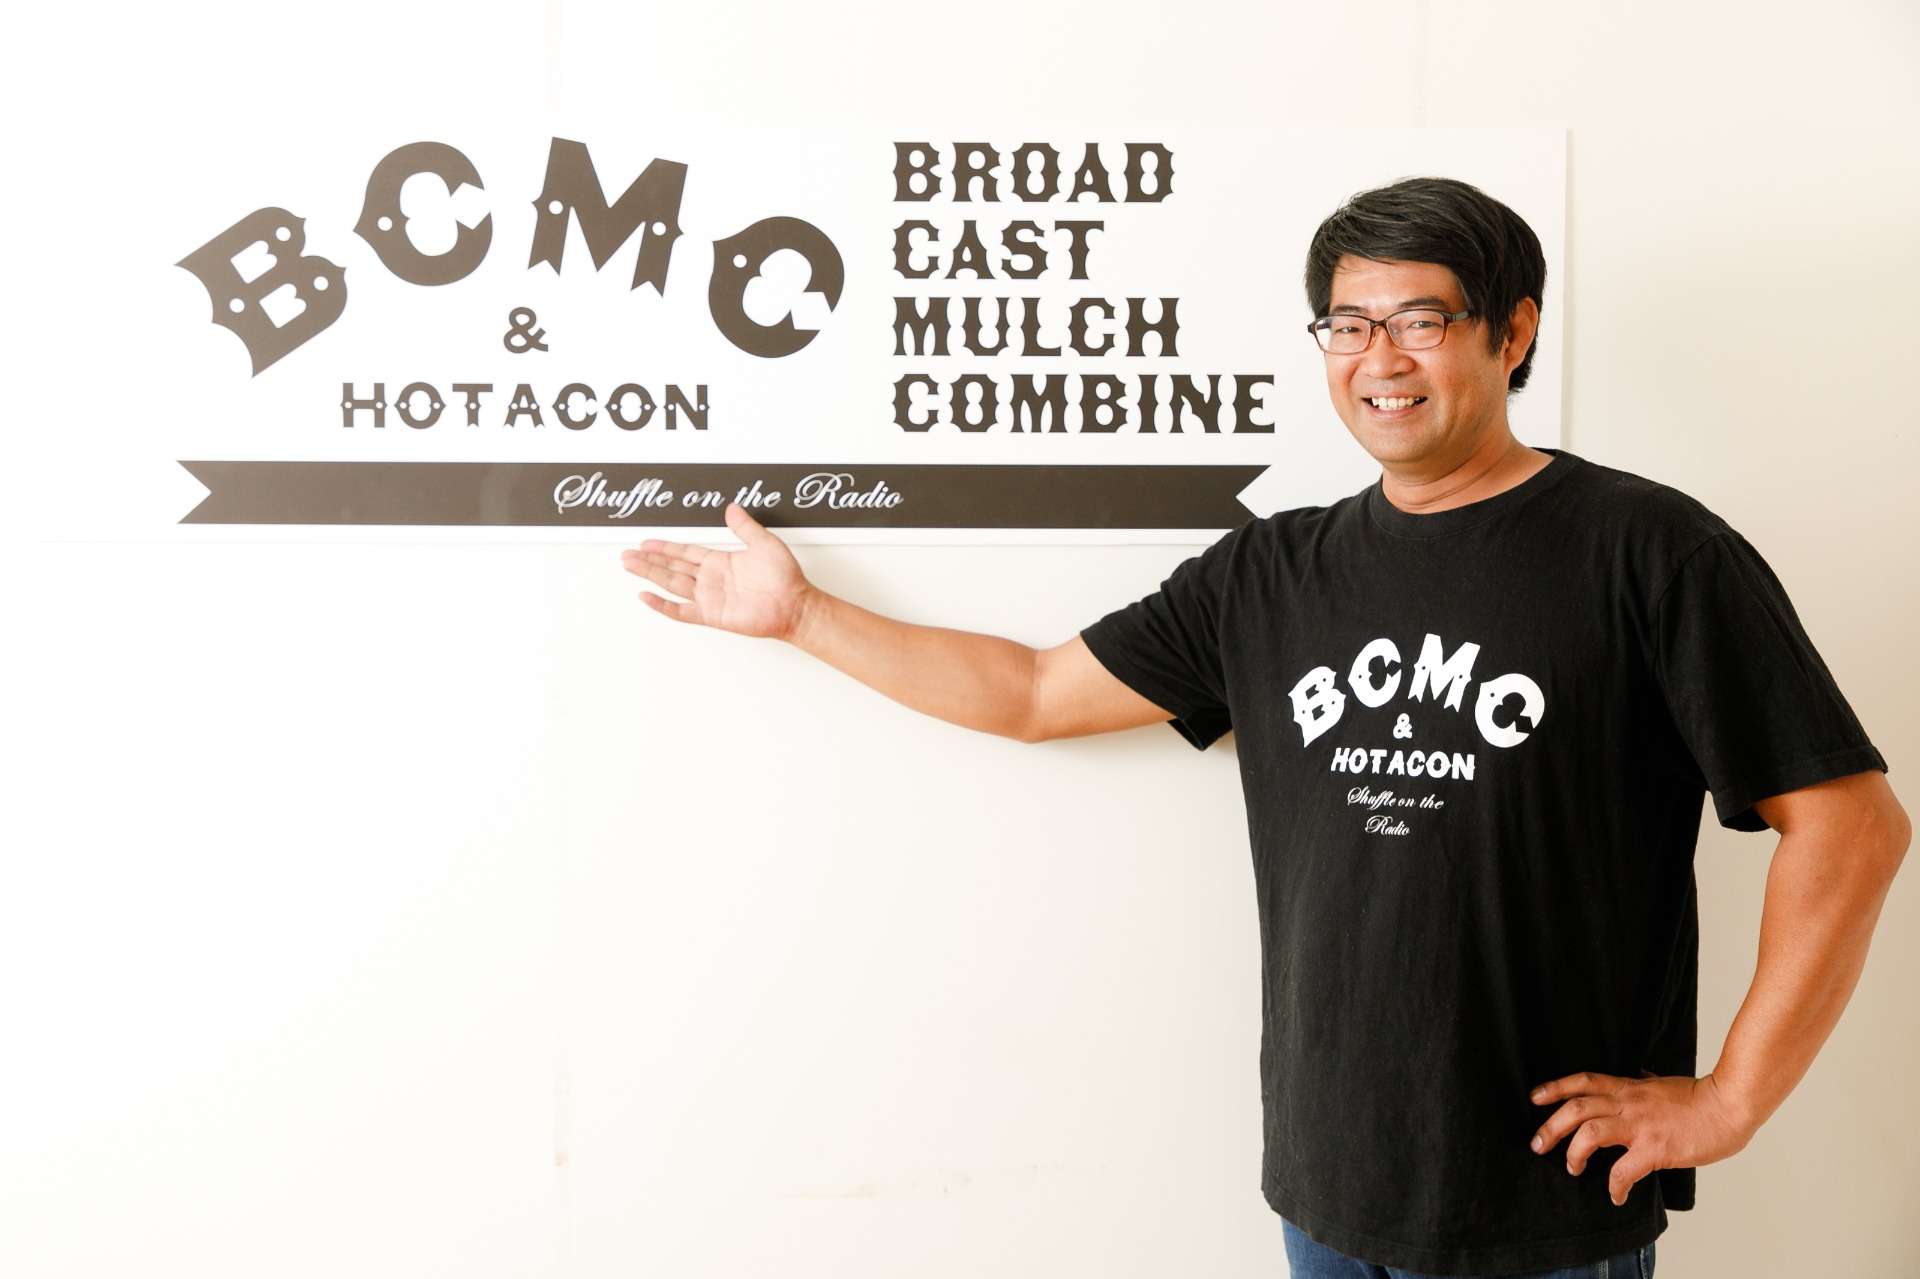 BCMCを語らせてもらったラジオ収録。これからの事業展開を応援するということ。